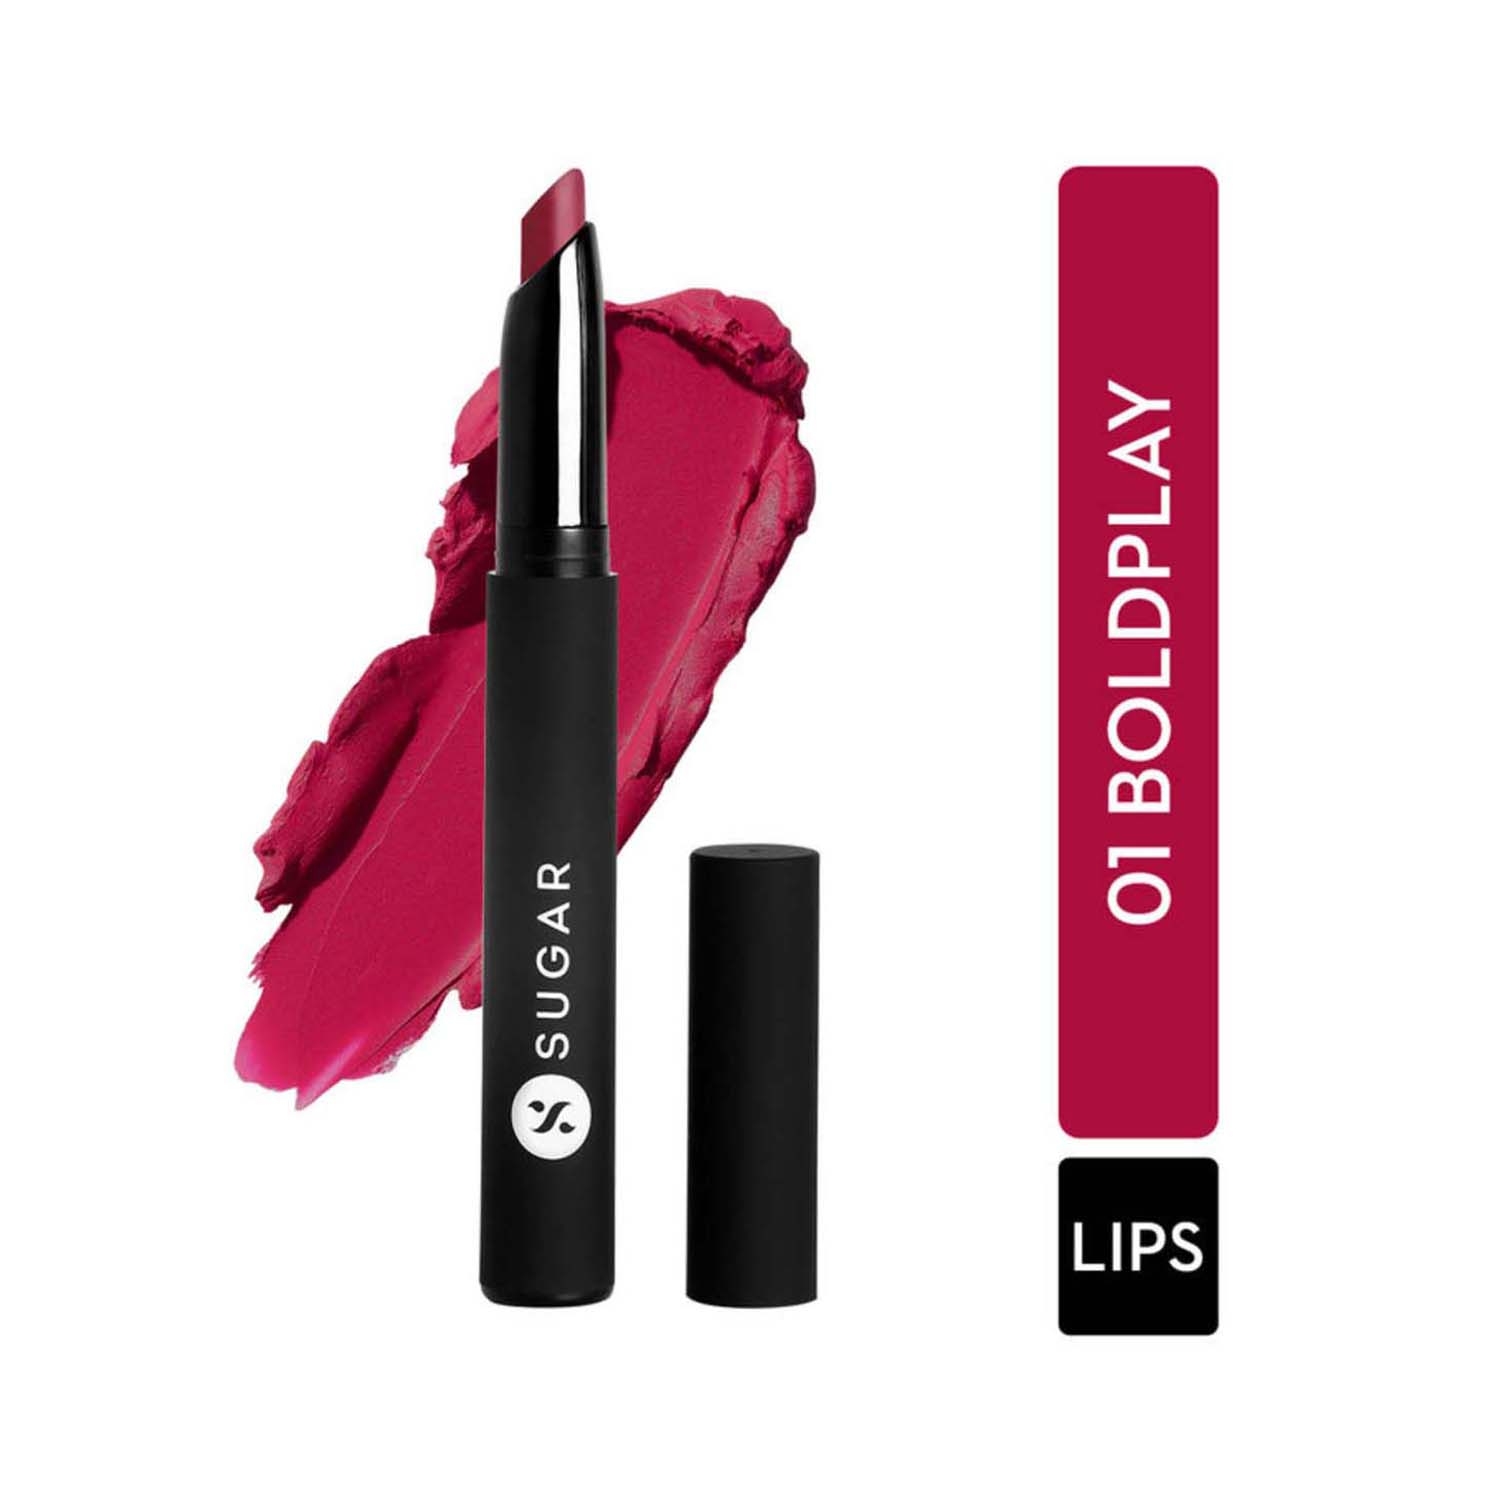 SUGAR Cosmetics | SUGAR Cosmetics Matte Attack Transferproof Lipstick - 01 Boldplay (Cardinal Pink) (2g)